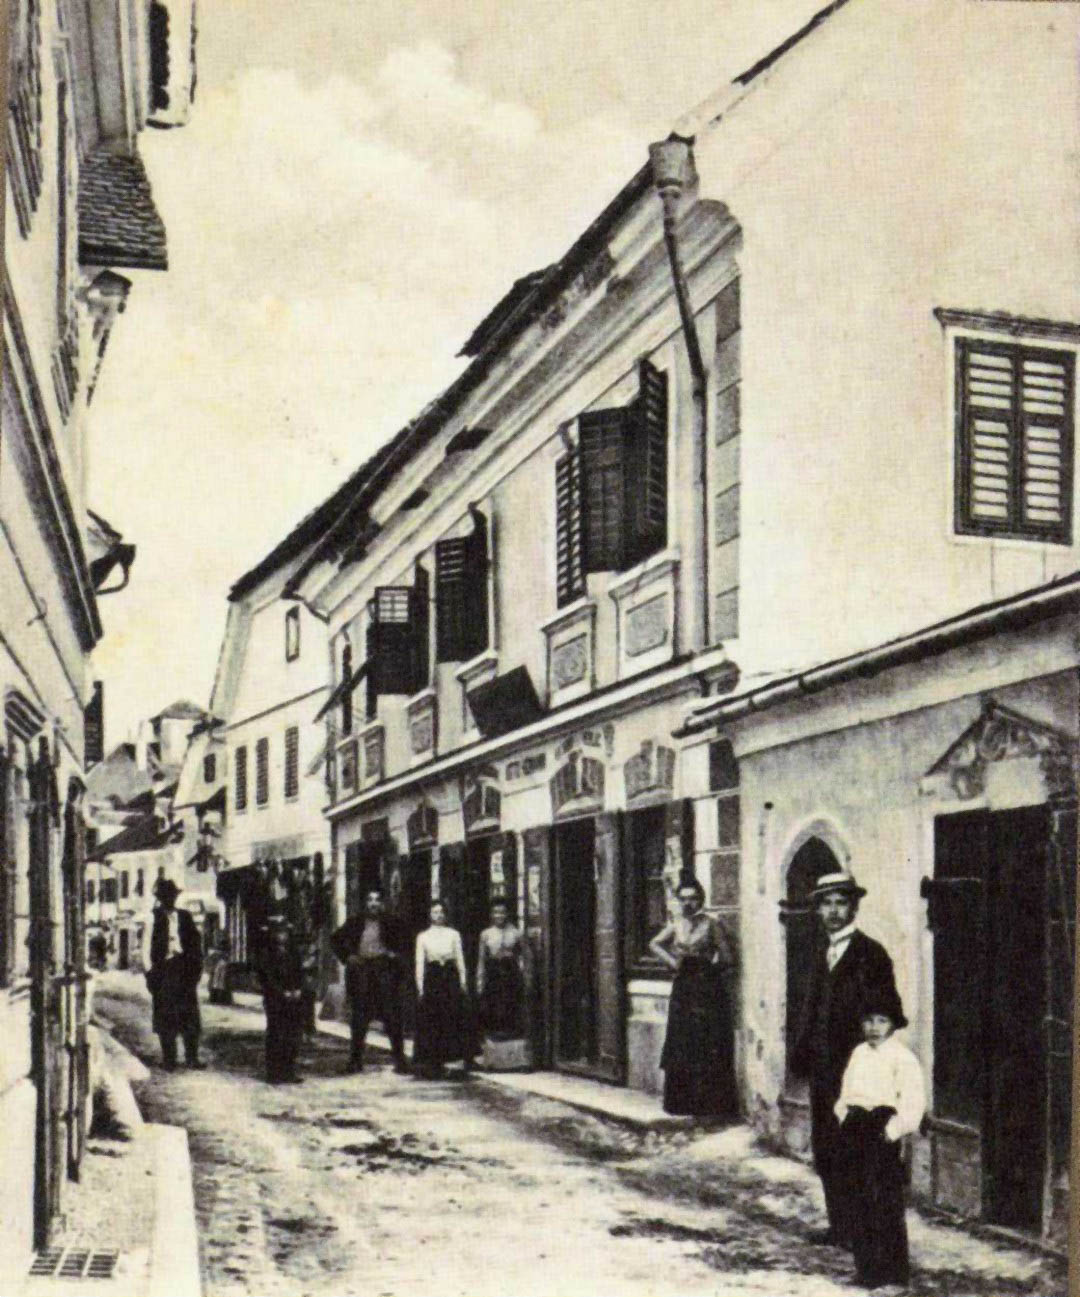 m1) Vhod v trg, 1906 (arhiv Jelka Lapuh)